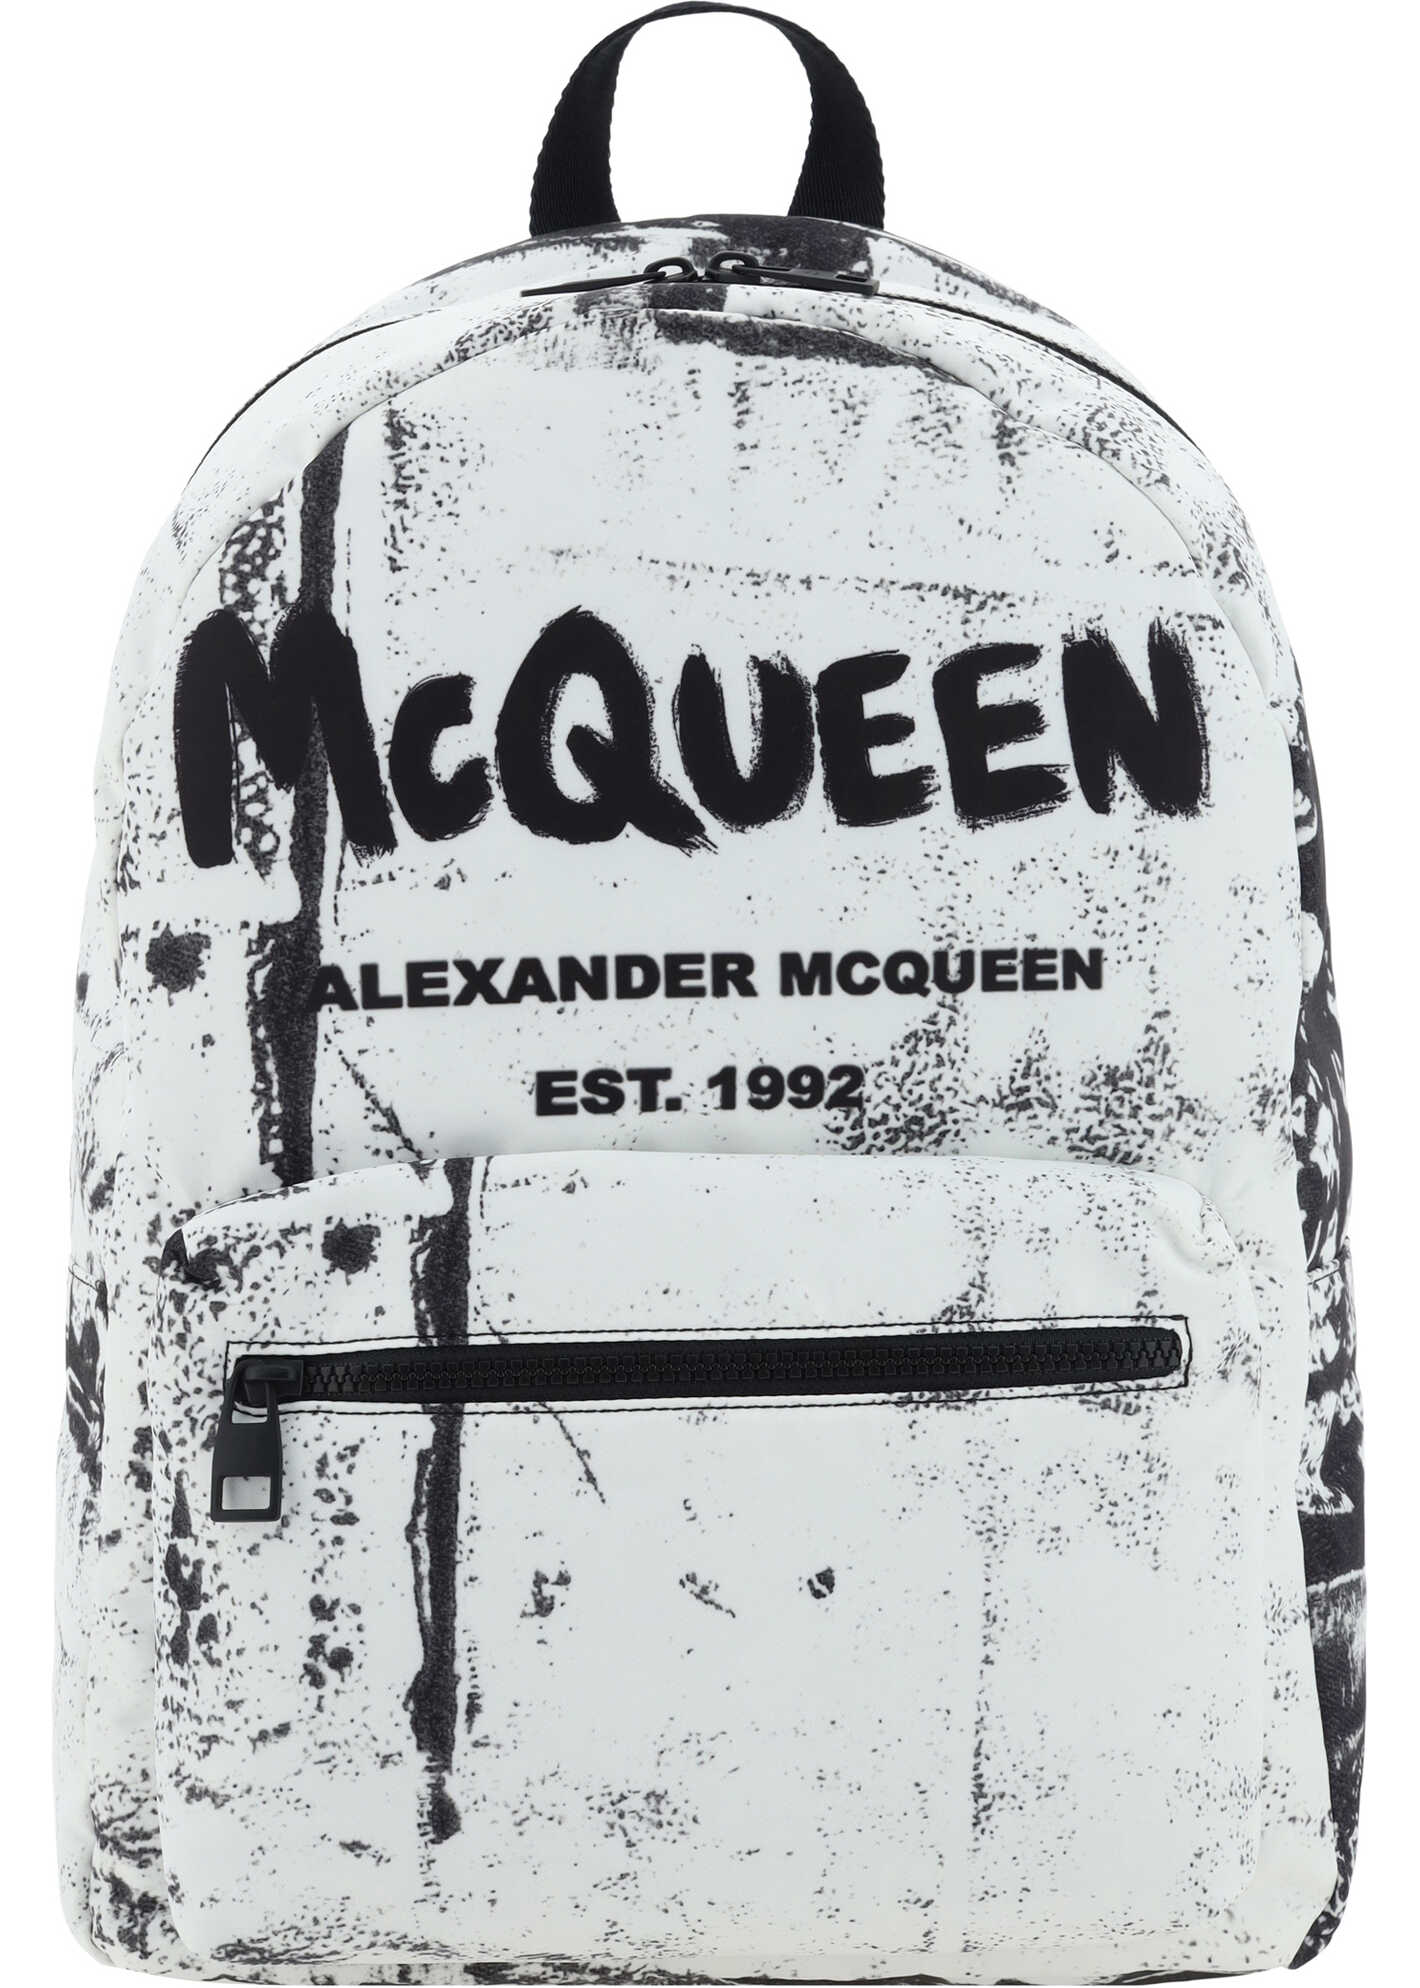 Alexander McQueen Metropolitan Backpack BLACK/WHITE